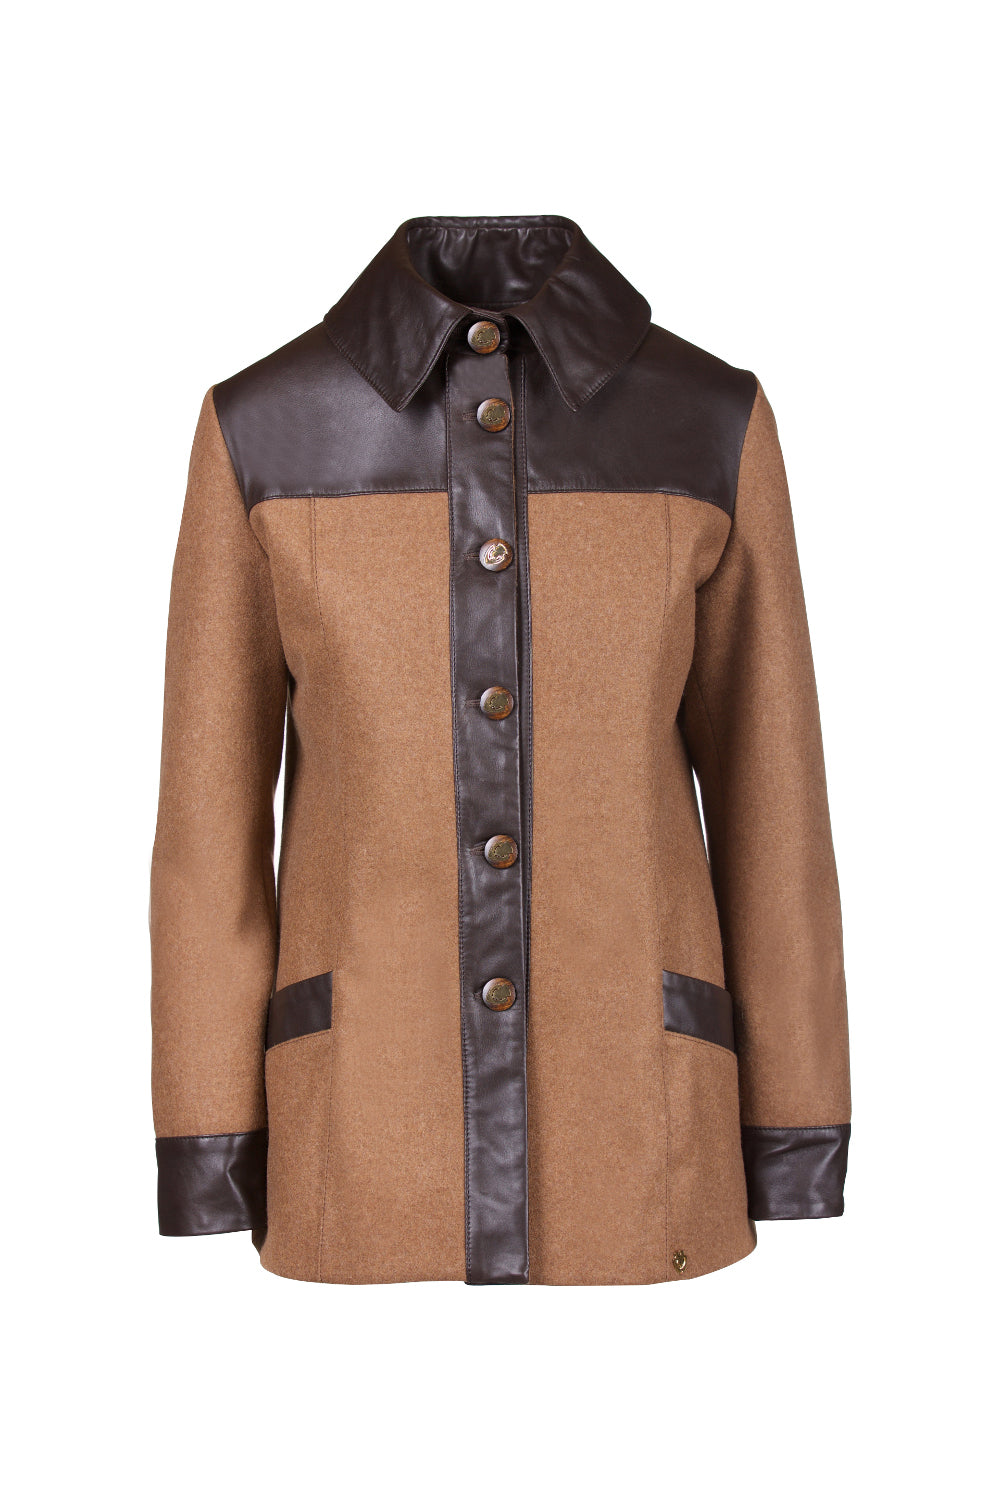 Merino Wool Winter Reindeer Leather Jacket- Limited Edition